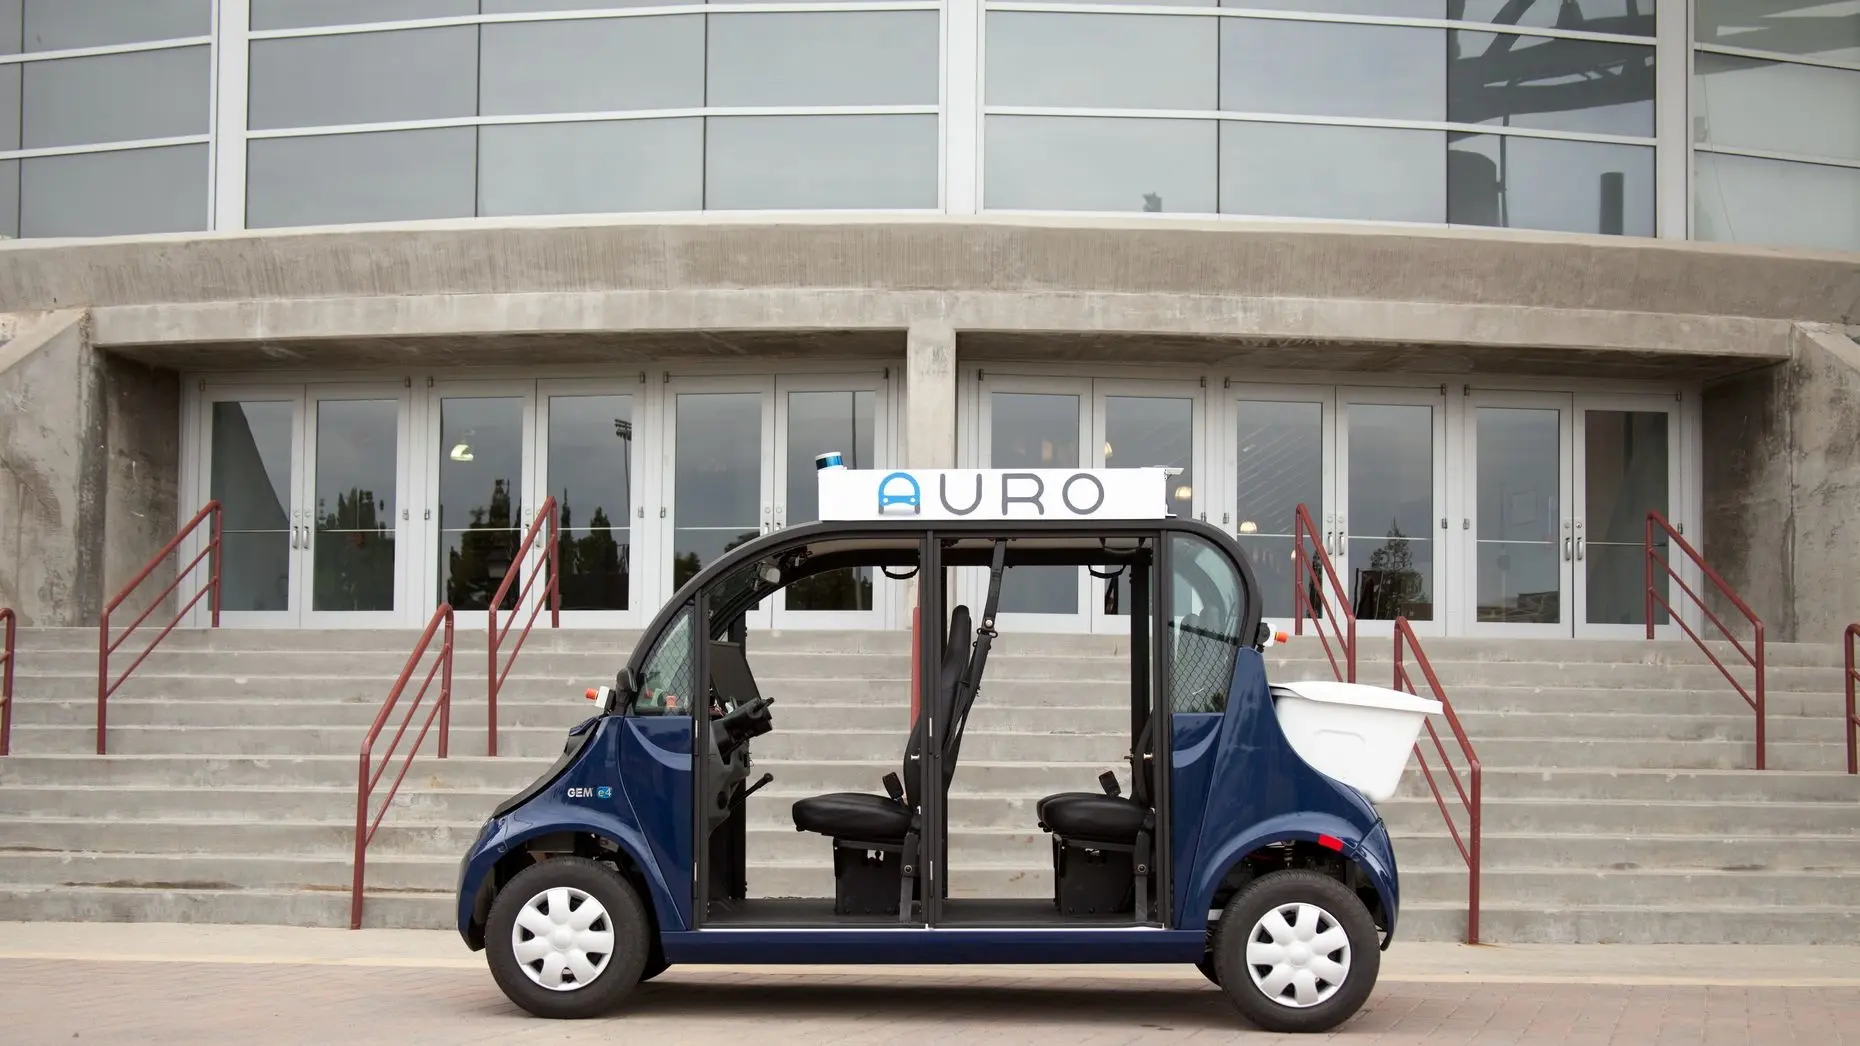 Ridecell buys autonomous vehicle technology firm Auro